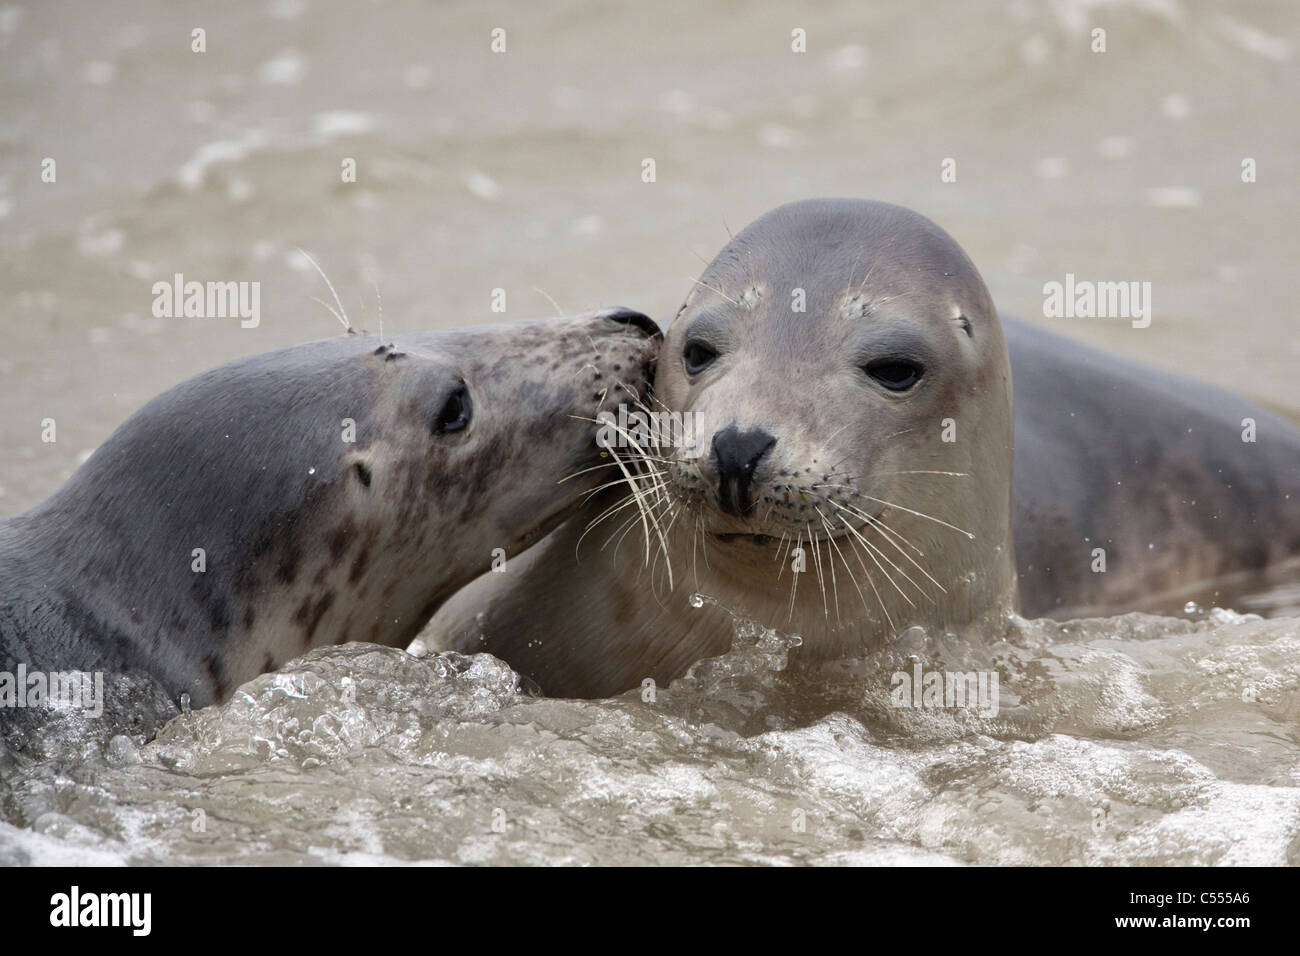 The Netherlands, Hollum, Ameland Island, belonging to Wadden Sea Islands. Unesco World Heritage Site. Seals. Stock Photo